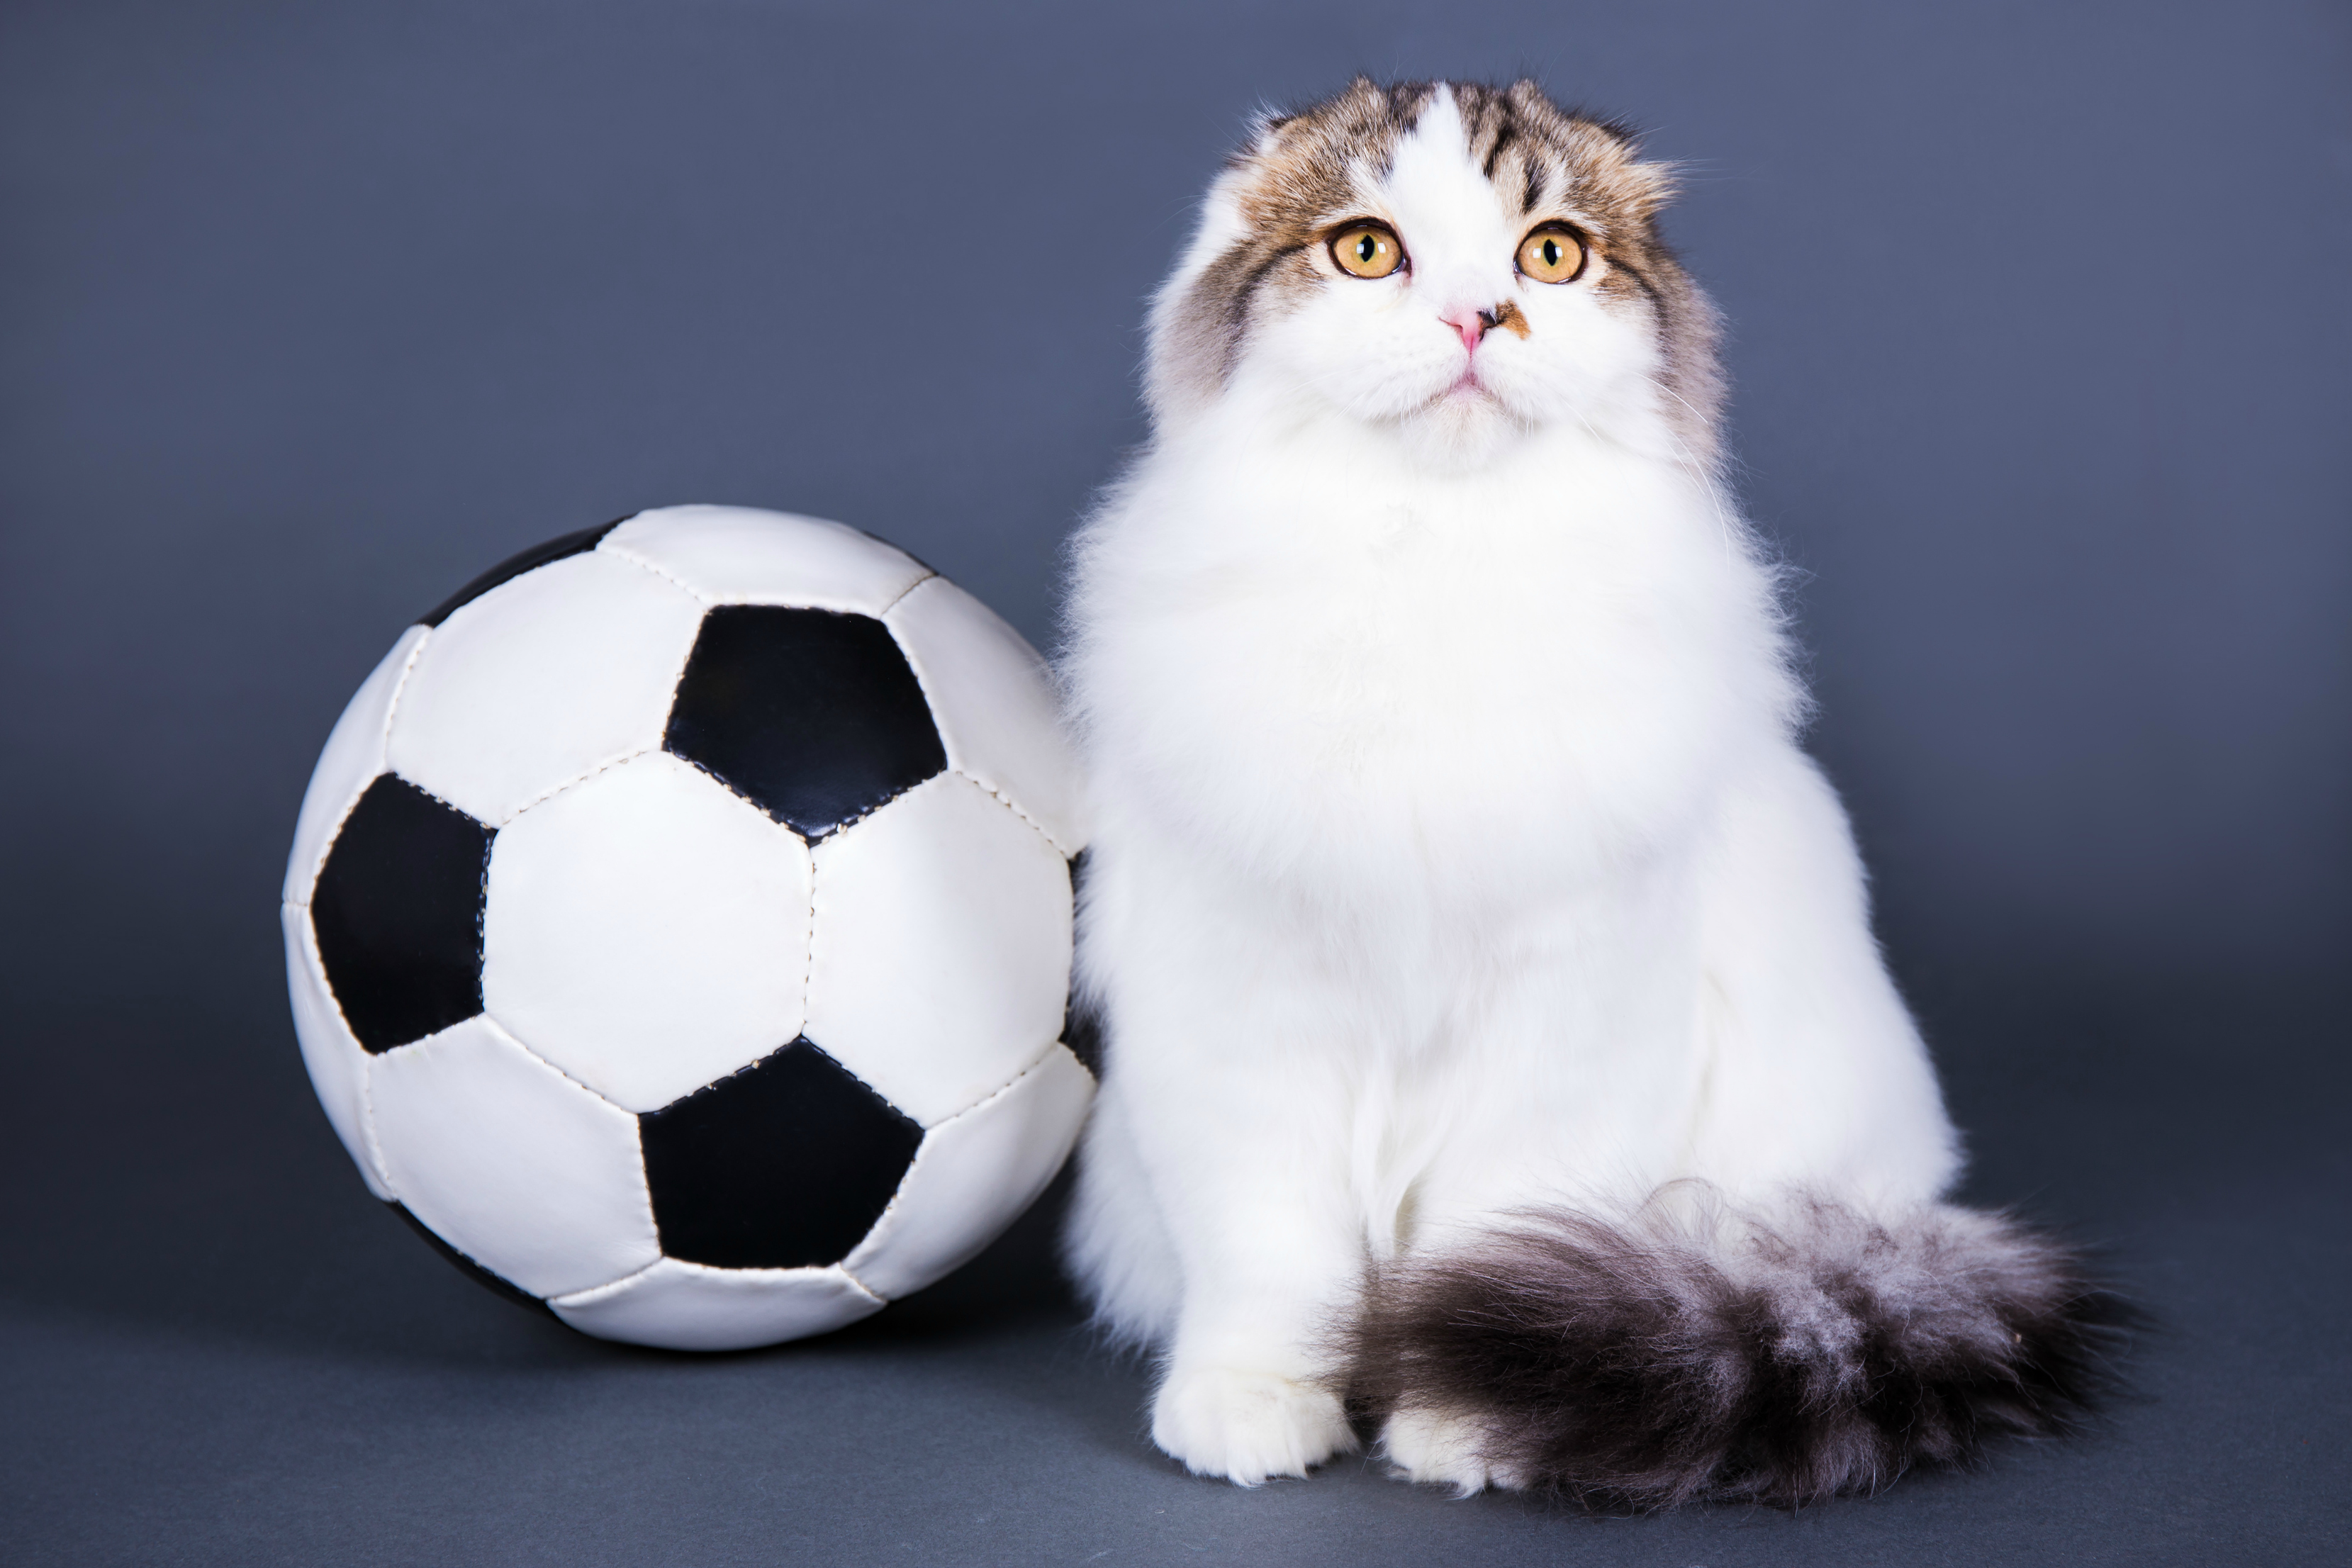 20160908 the18 image cat soccer shutterstock